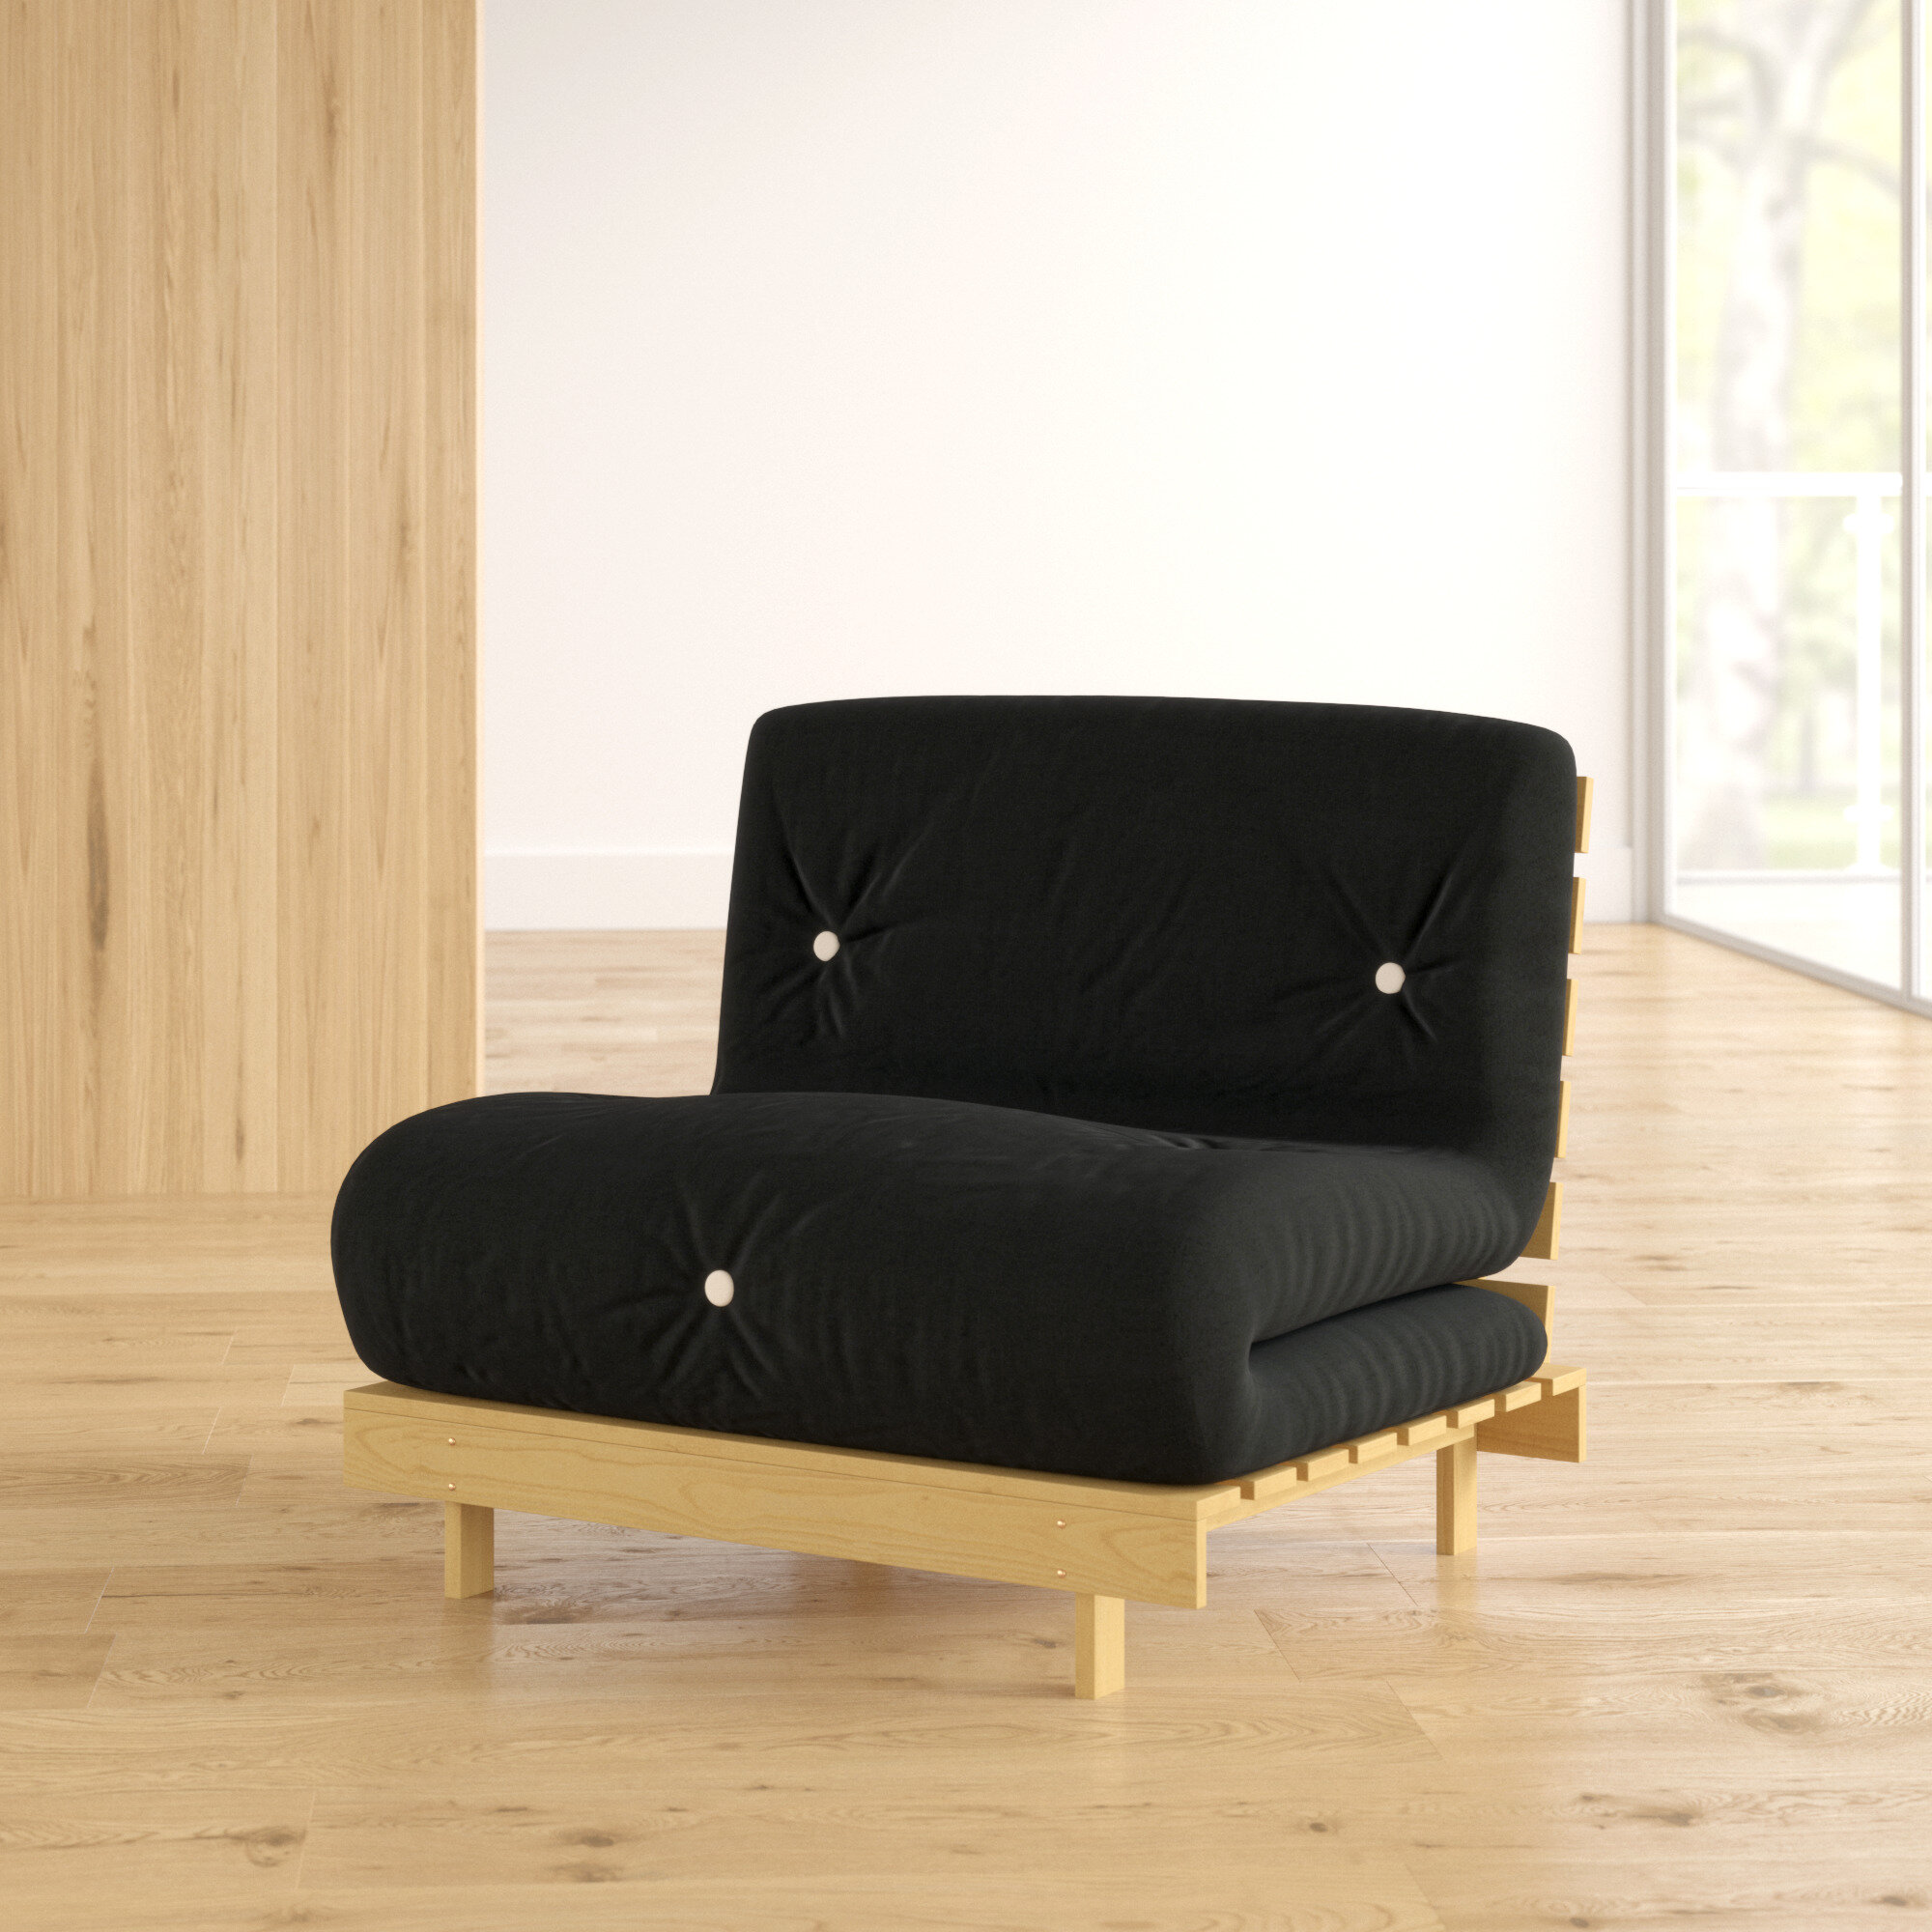 Zipcode Design Kaley 1 Seater Futon Chair Reviews Wayfair Co Uk